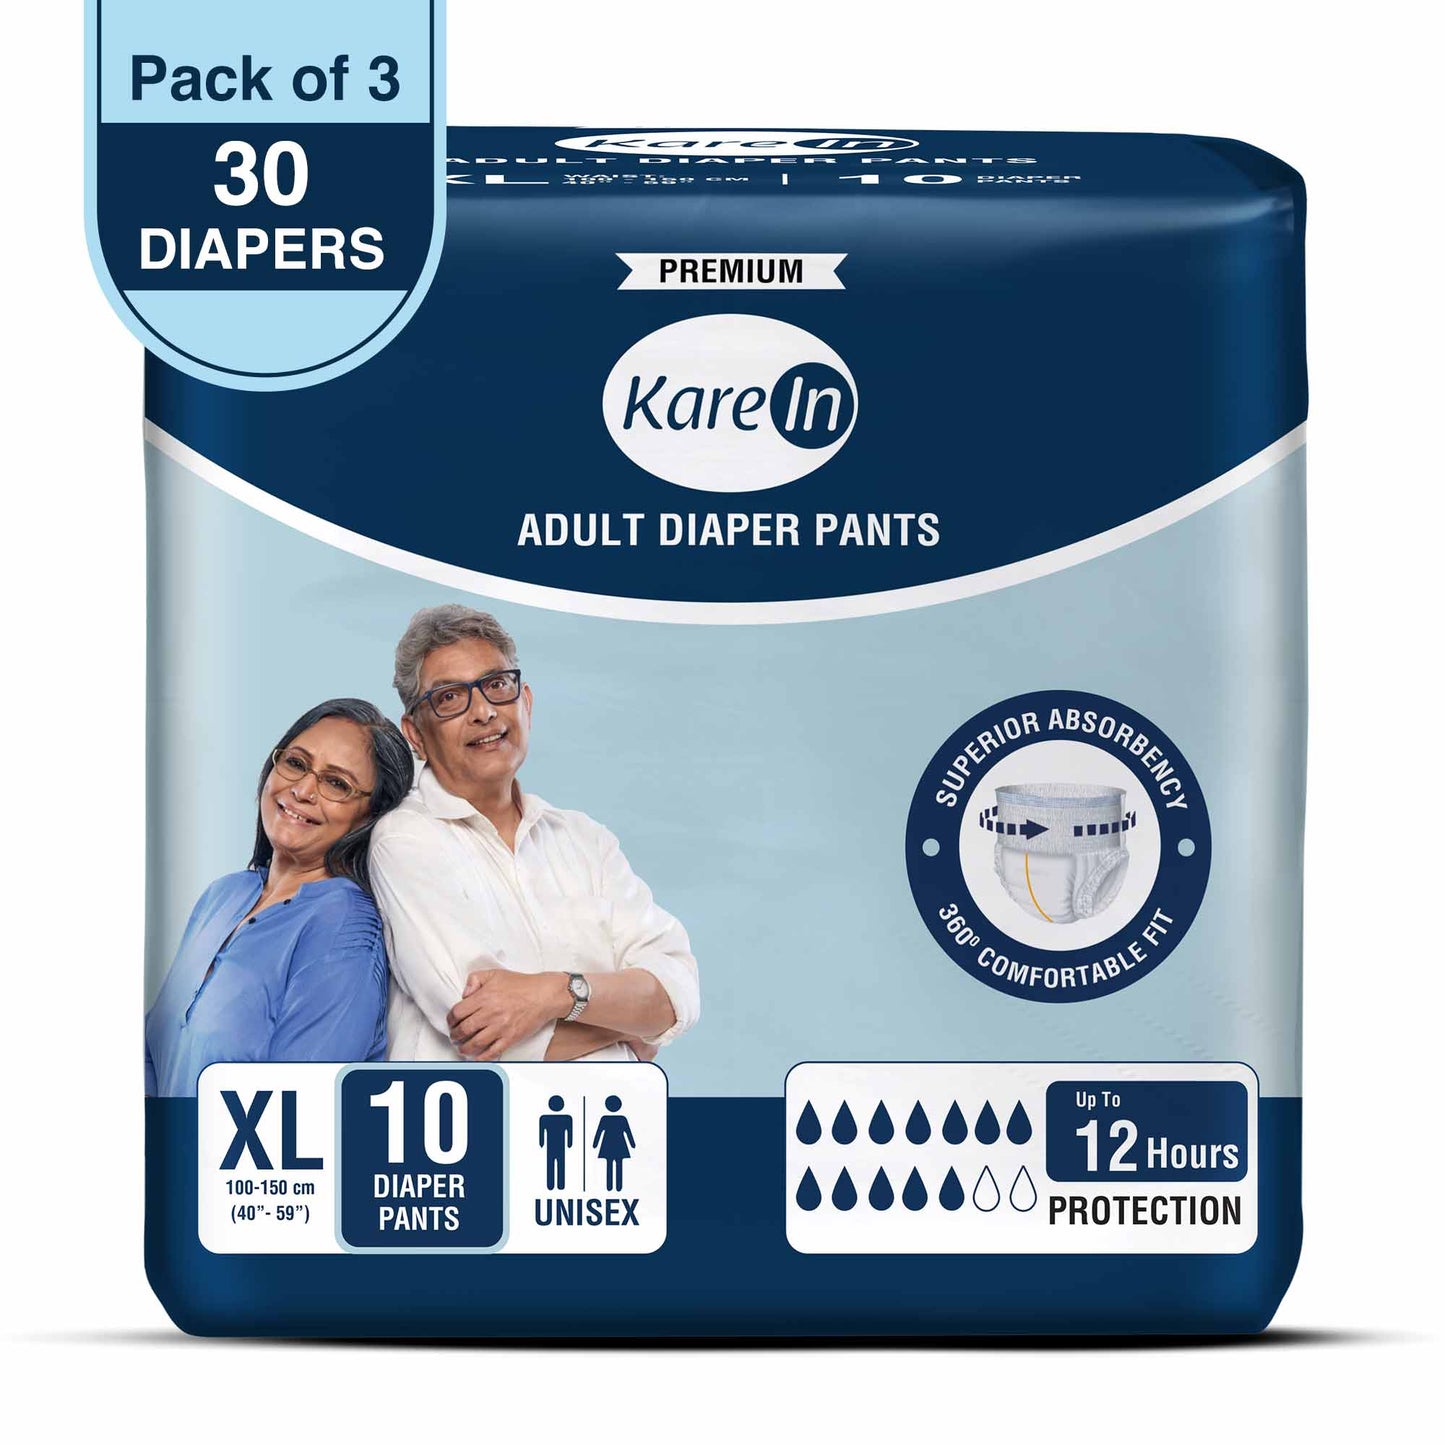 KareIn Premium Adult Diaper Pants, Extra Large 100 - 150 Cm (40"- 59"), Unisex, Leakproof, Elastic Waist, Wetness Indicator, Pack of 3, 30 Count